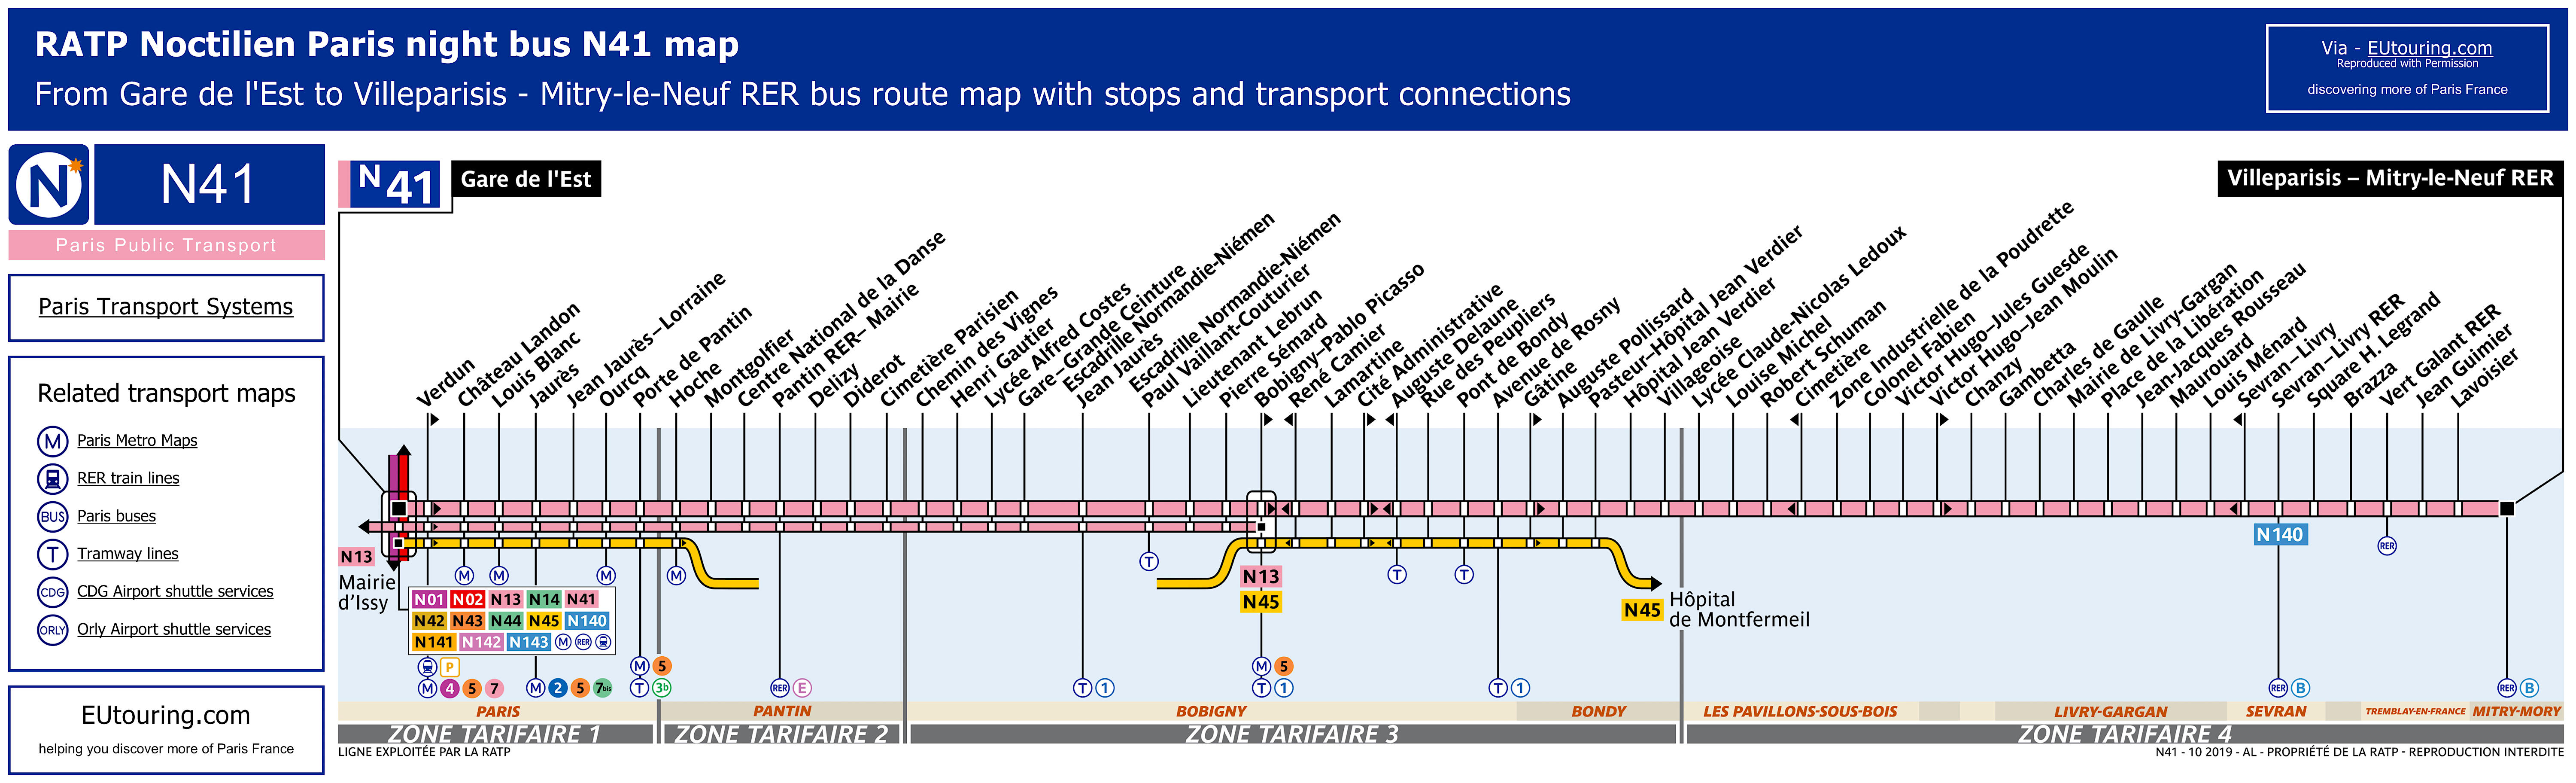 noctilien bus maps for paris night bus lines n40 to n49